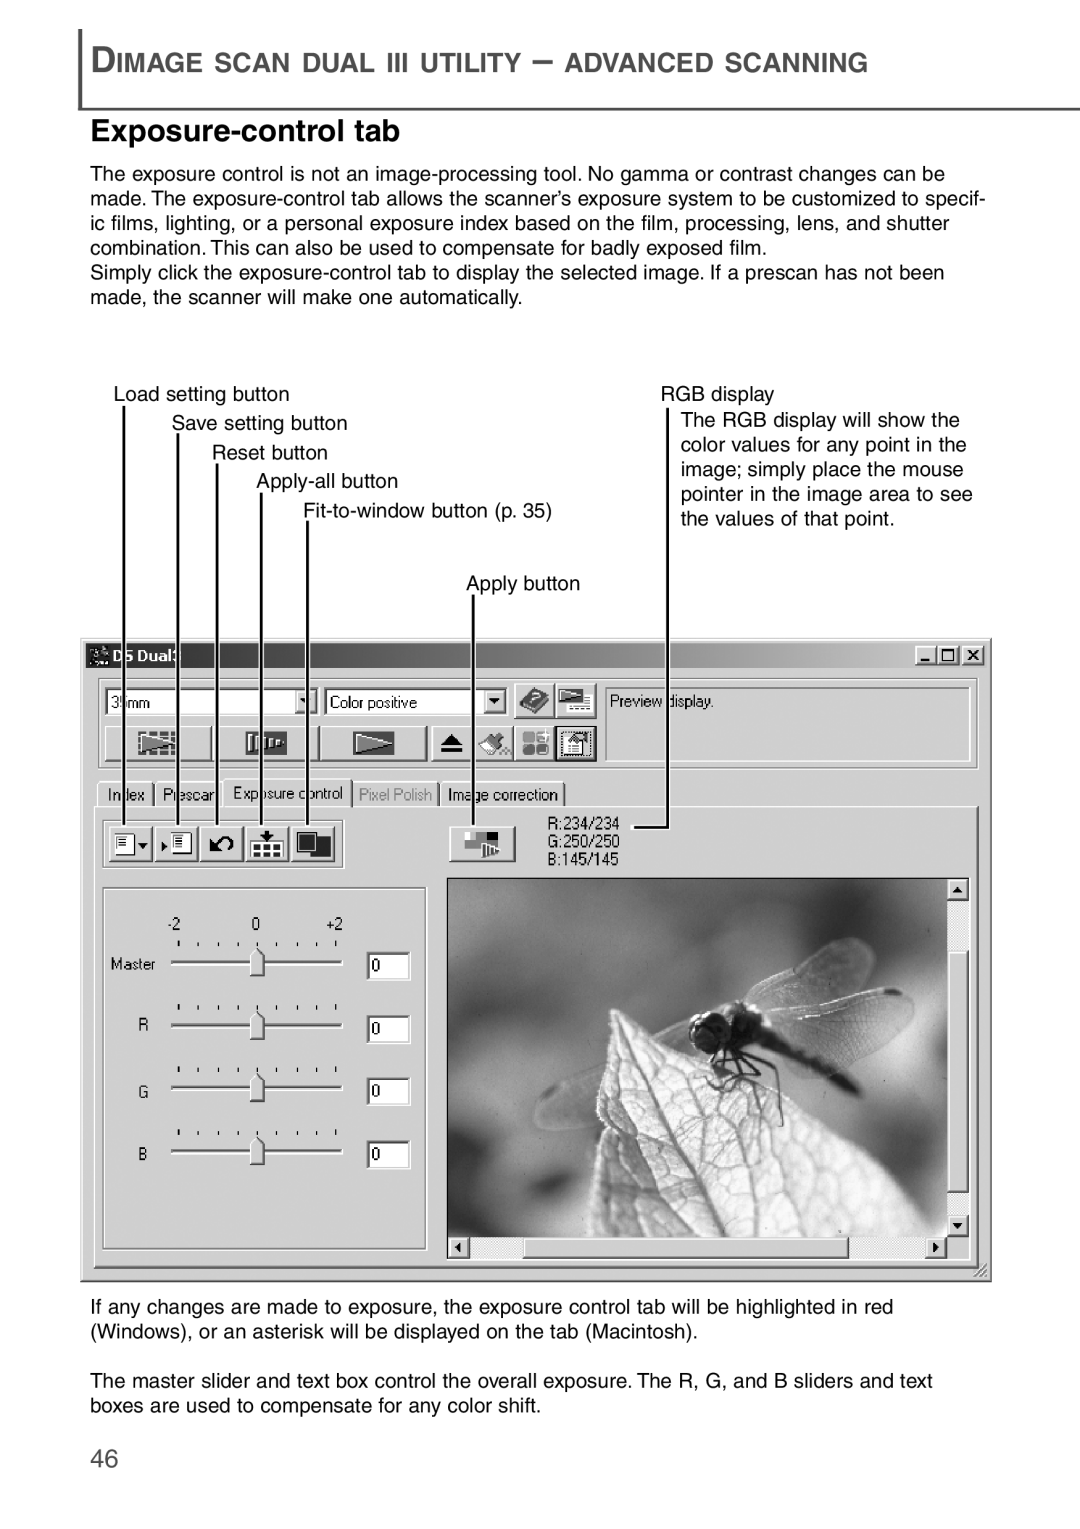 Konica Minolta AF-2840 instruction manual Exposure-controltab, Dimage Scan Dual Iii Utility – Advanced Scanning 